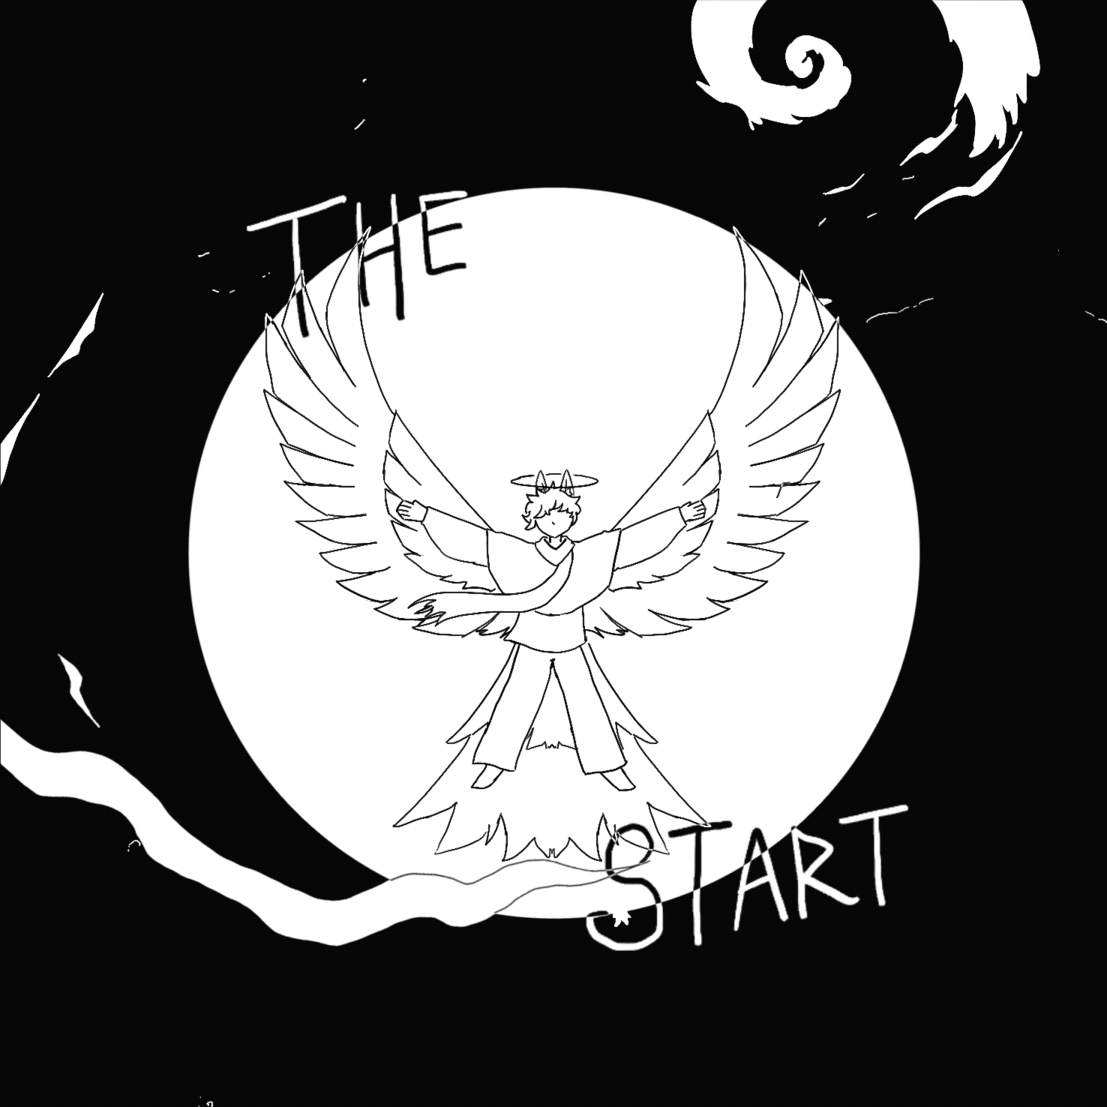 The Start